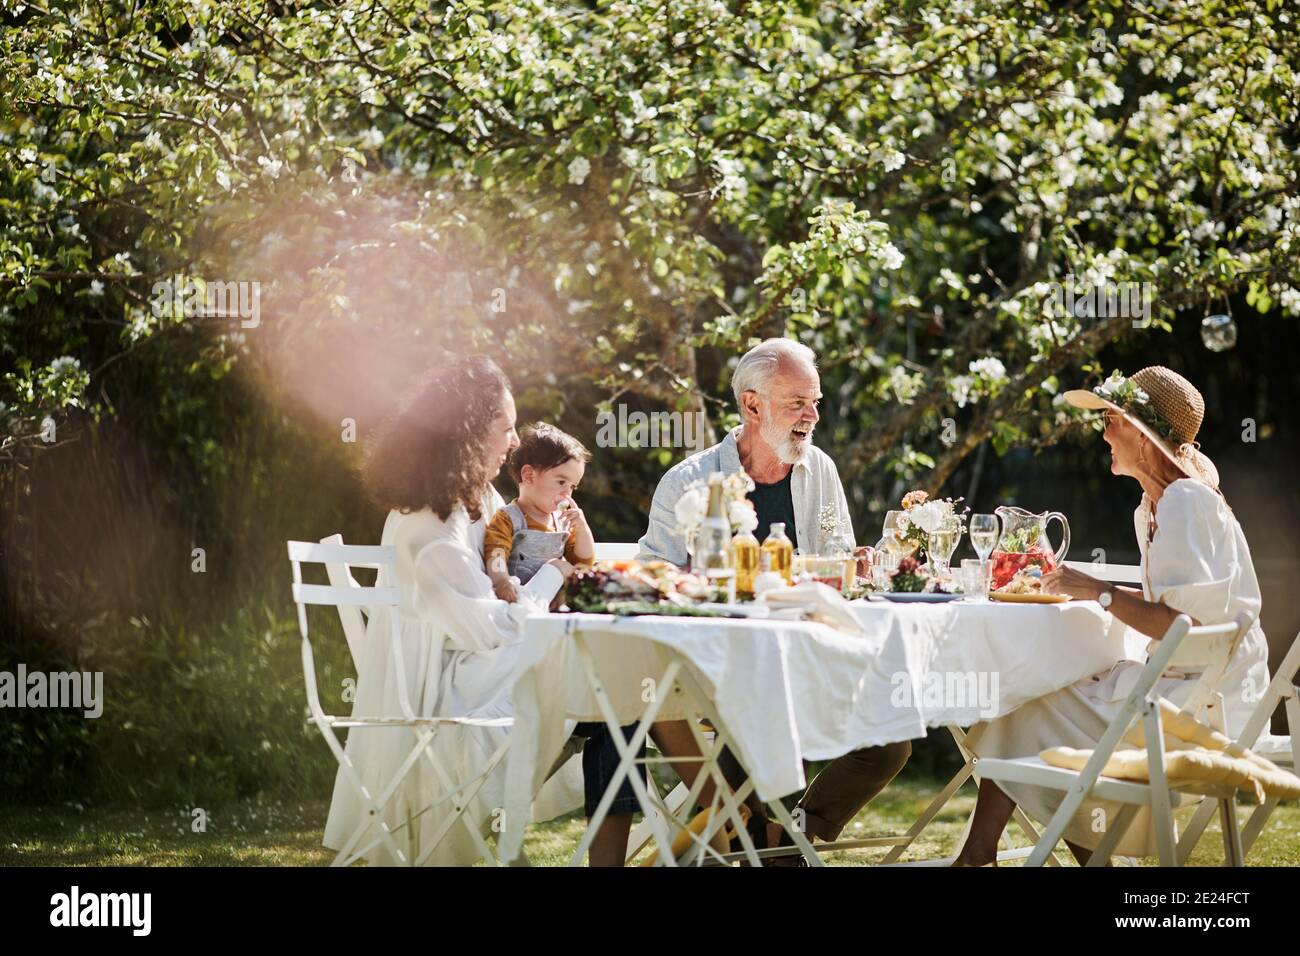 Family having meal in garden Stock Photo